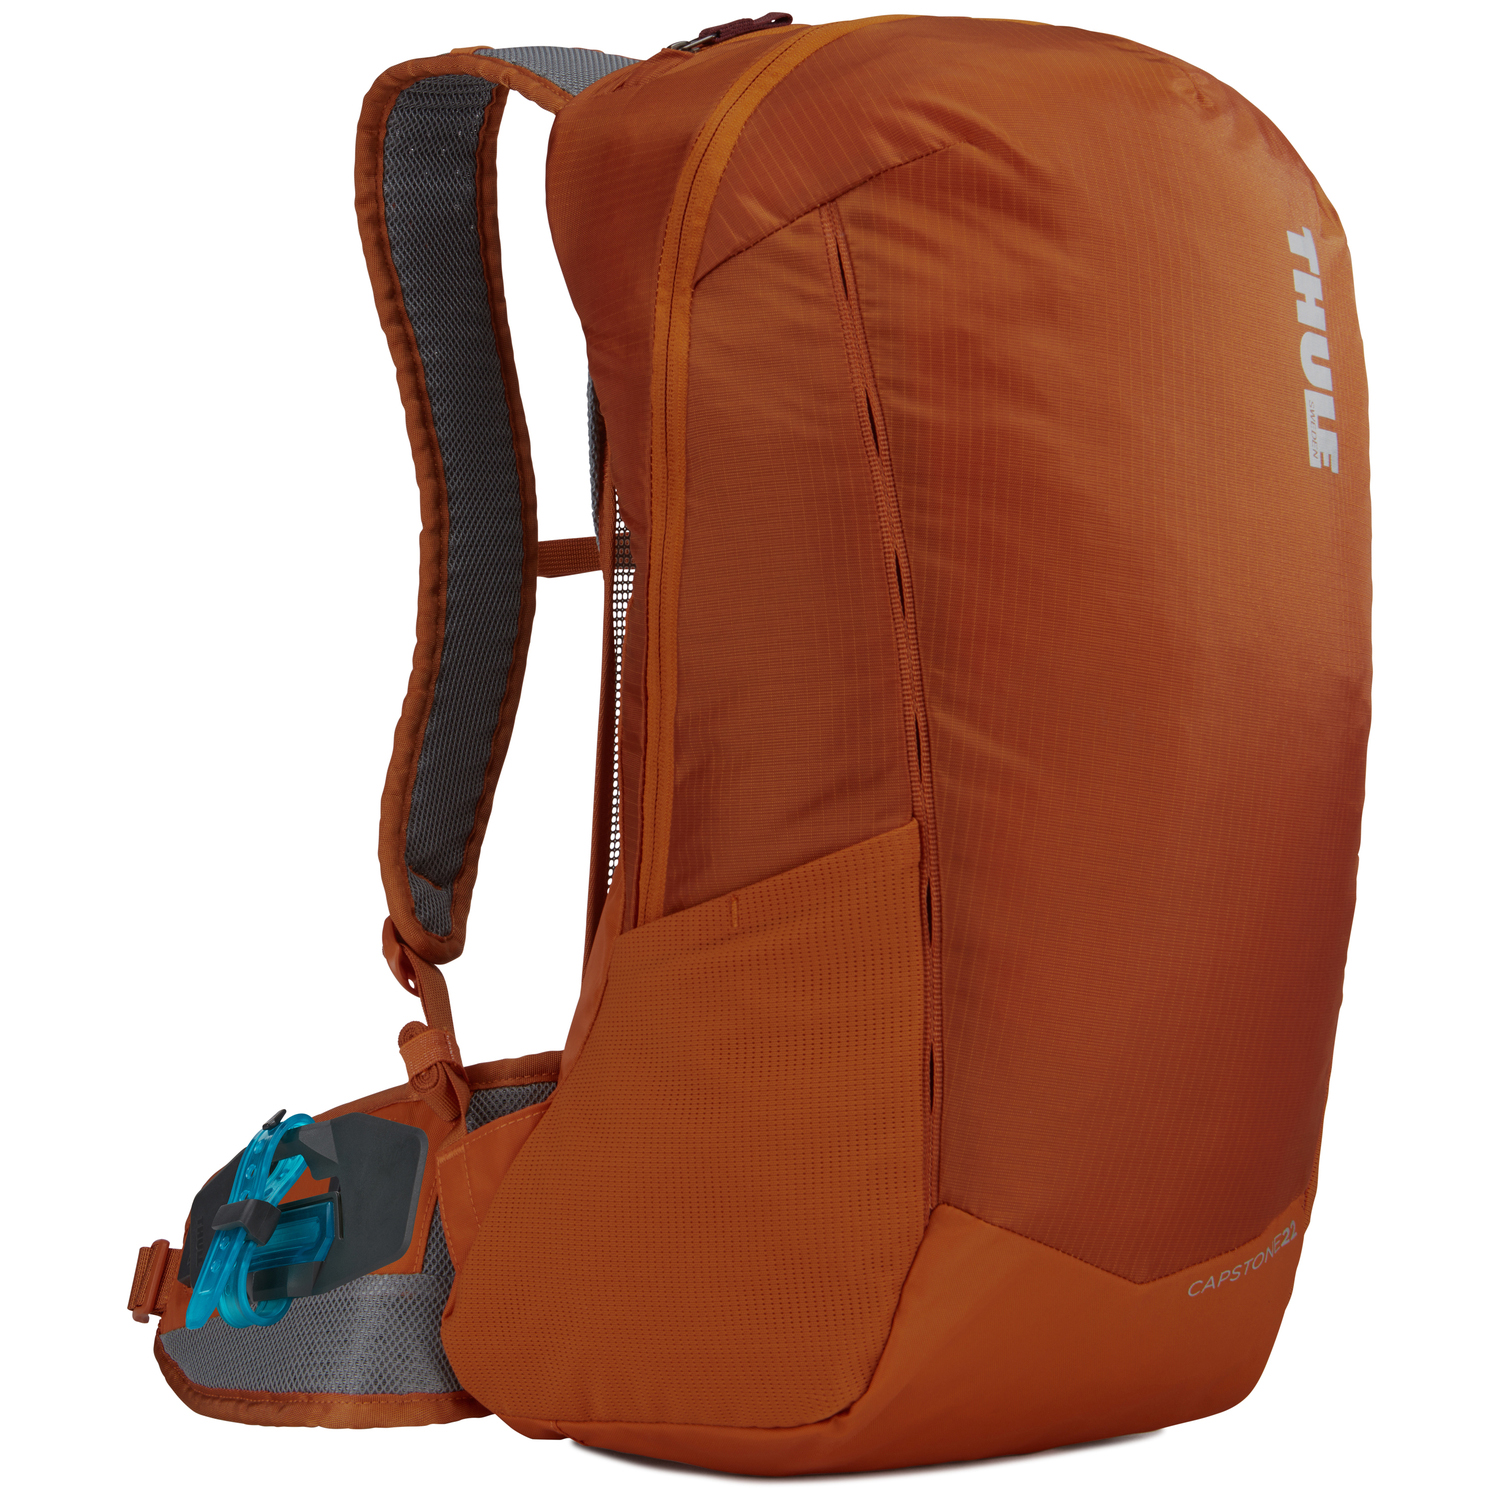 Thule Capstone 22L S/M Men Tagesrucksack Backpack mit Regenschutz 225105 orange